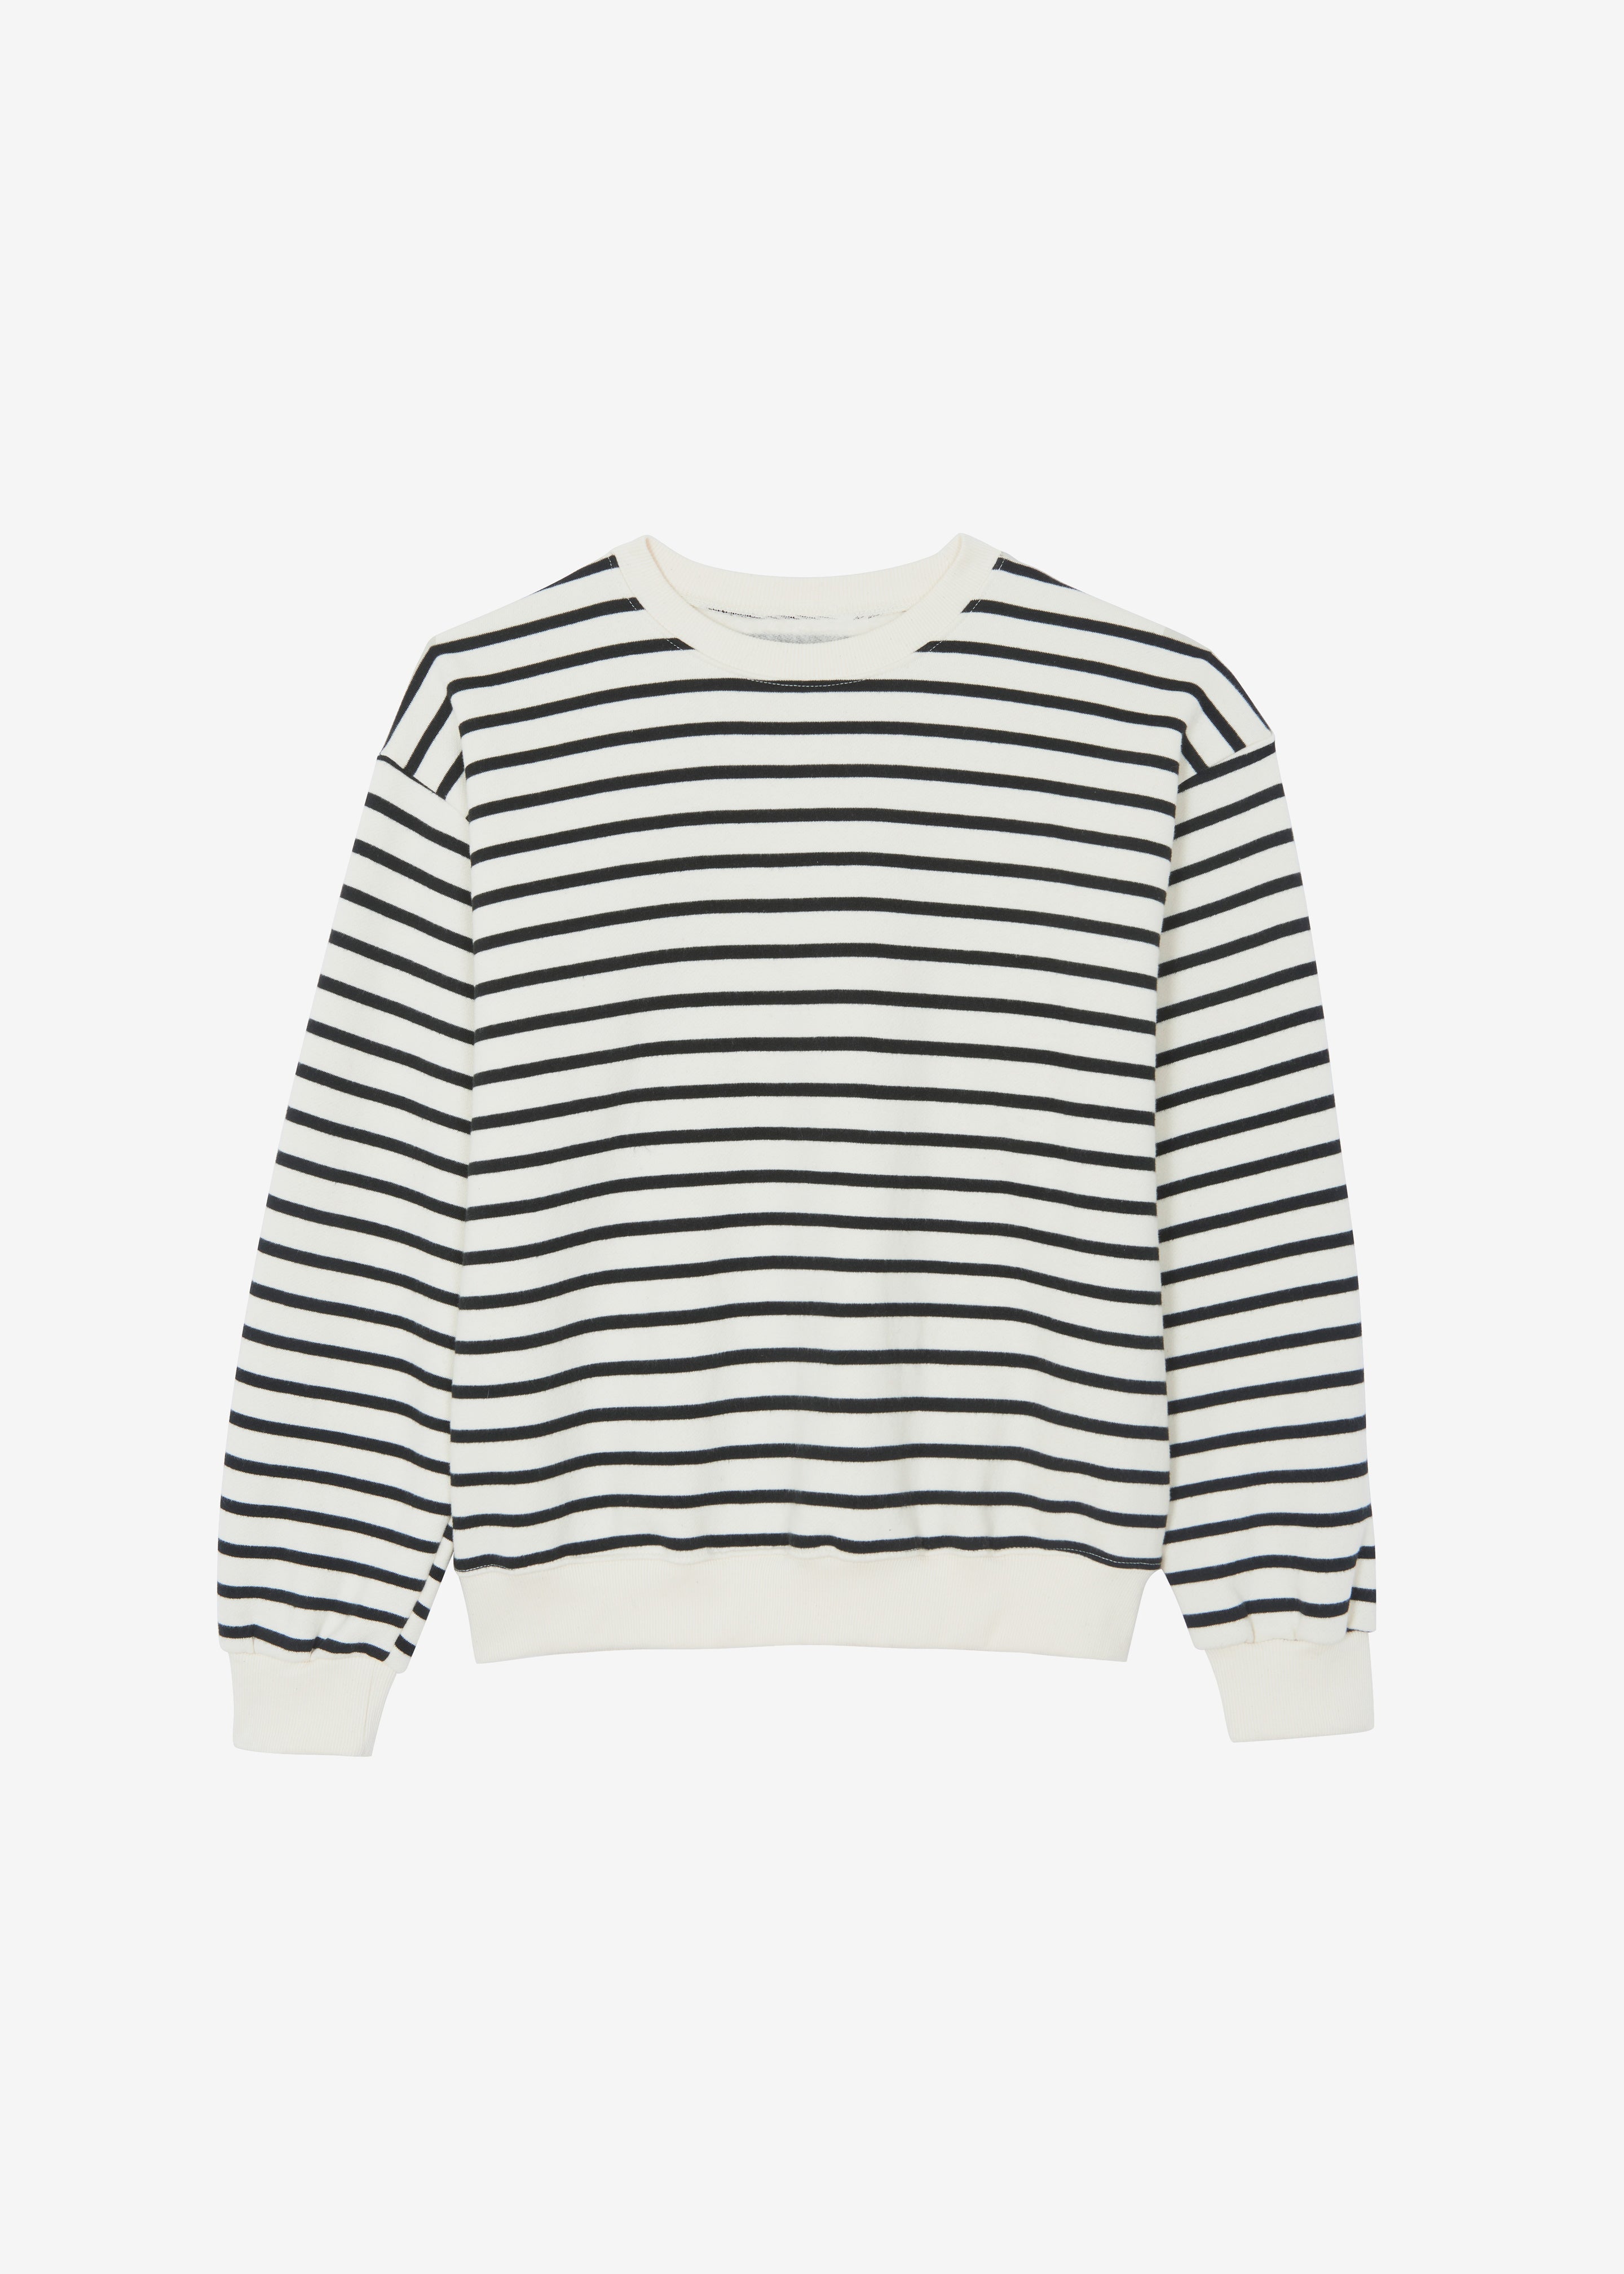 Saint Stripe Sweater - Black/White Stripe - 8